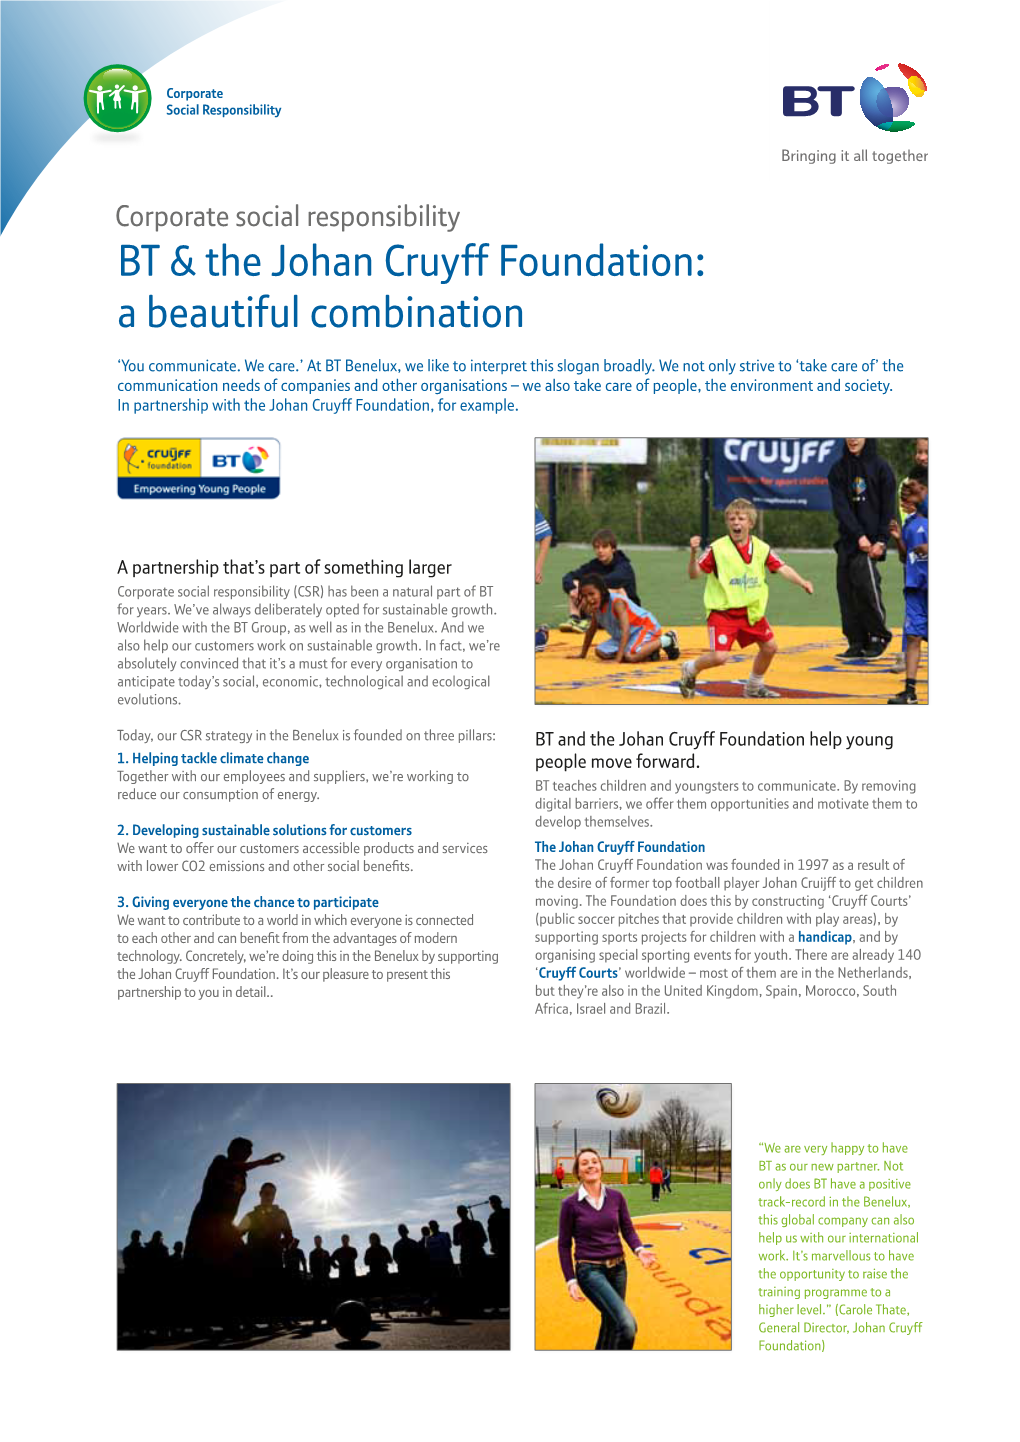 BT & the Johan Cruyff Foundation